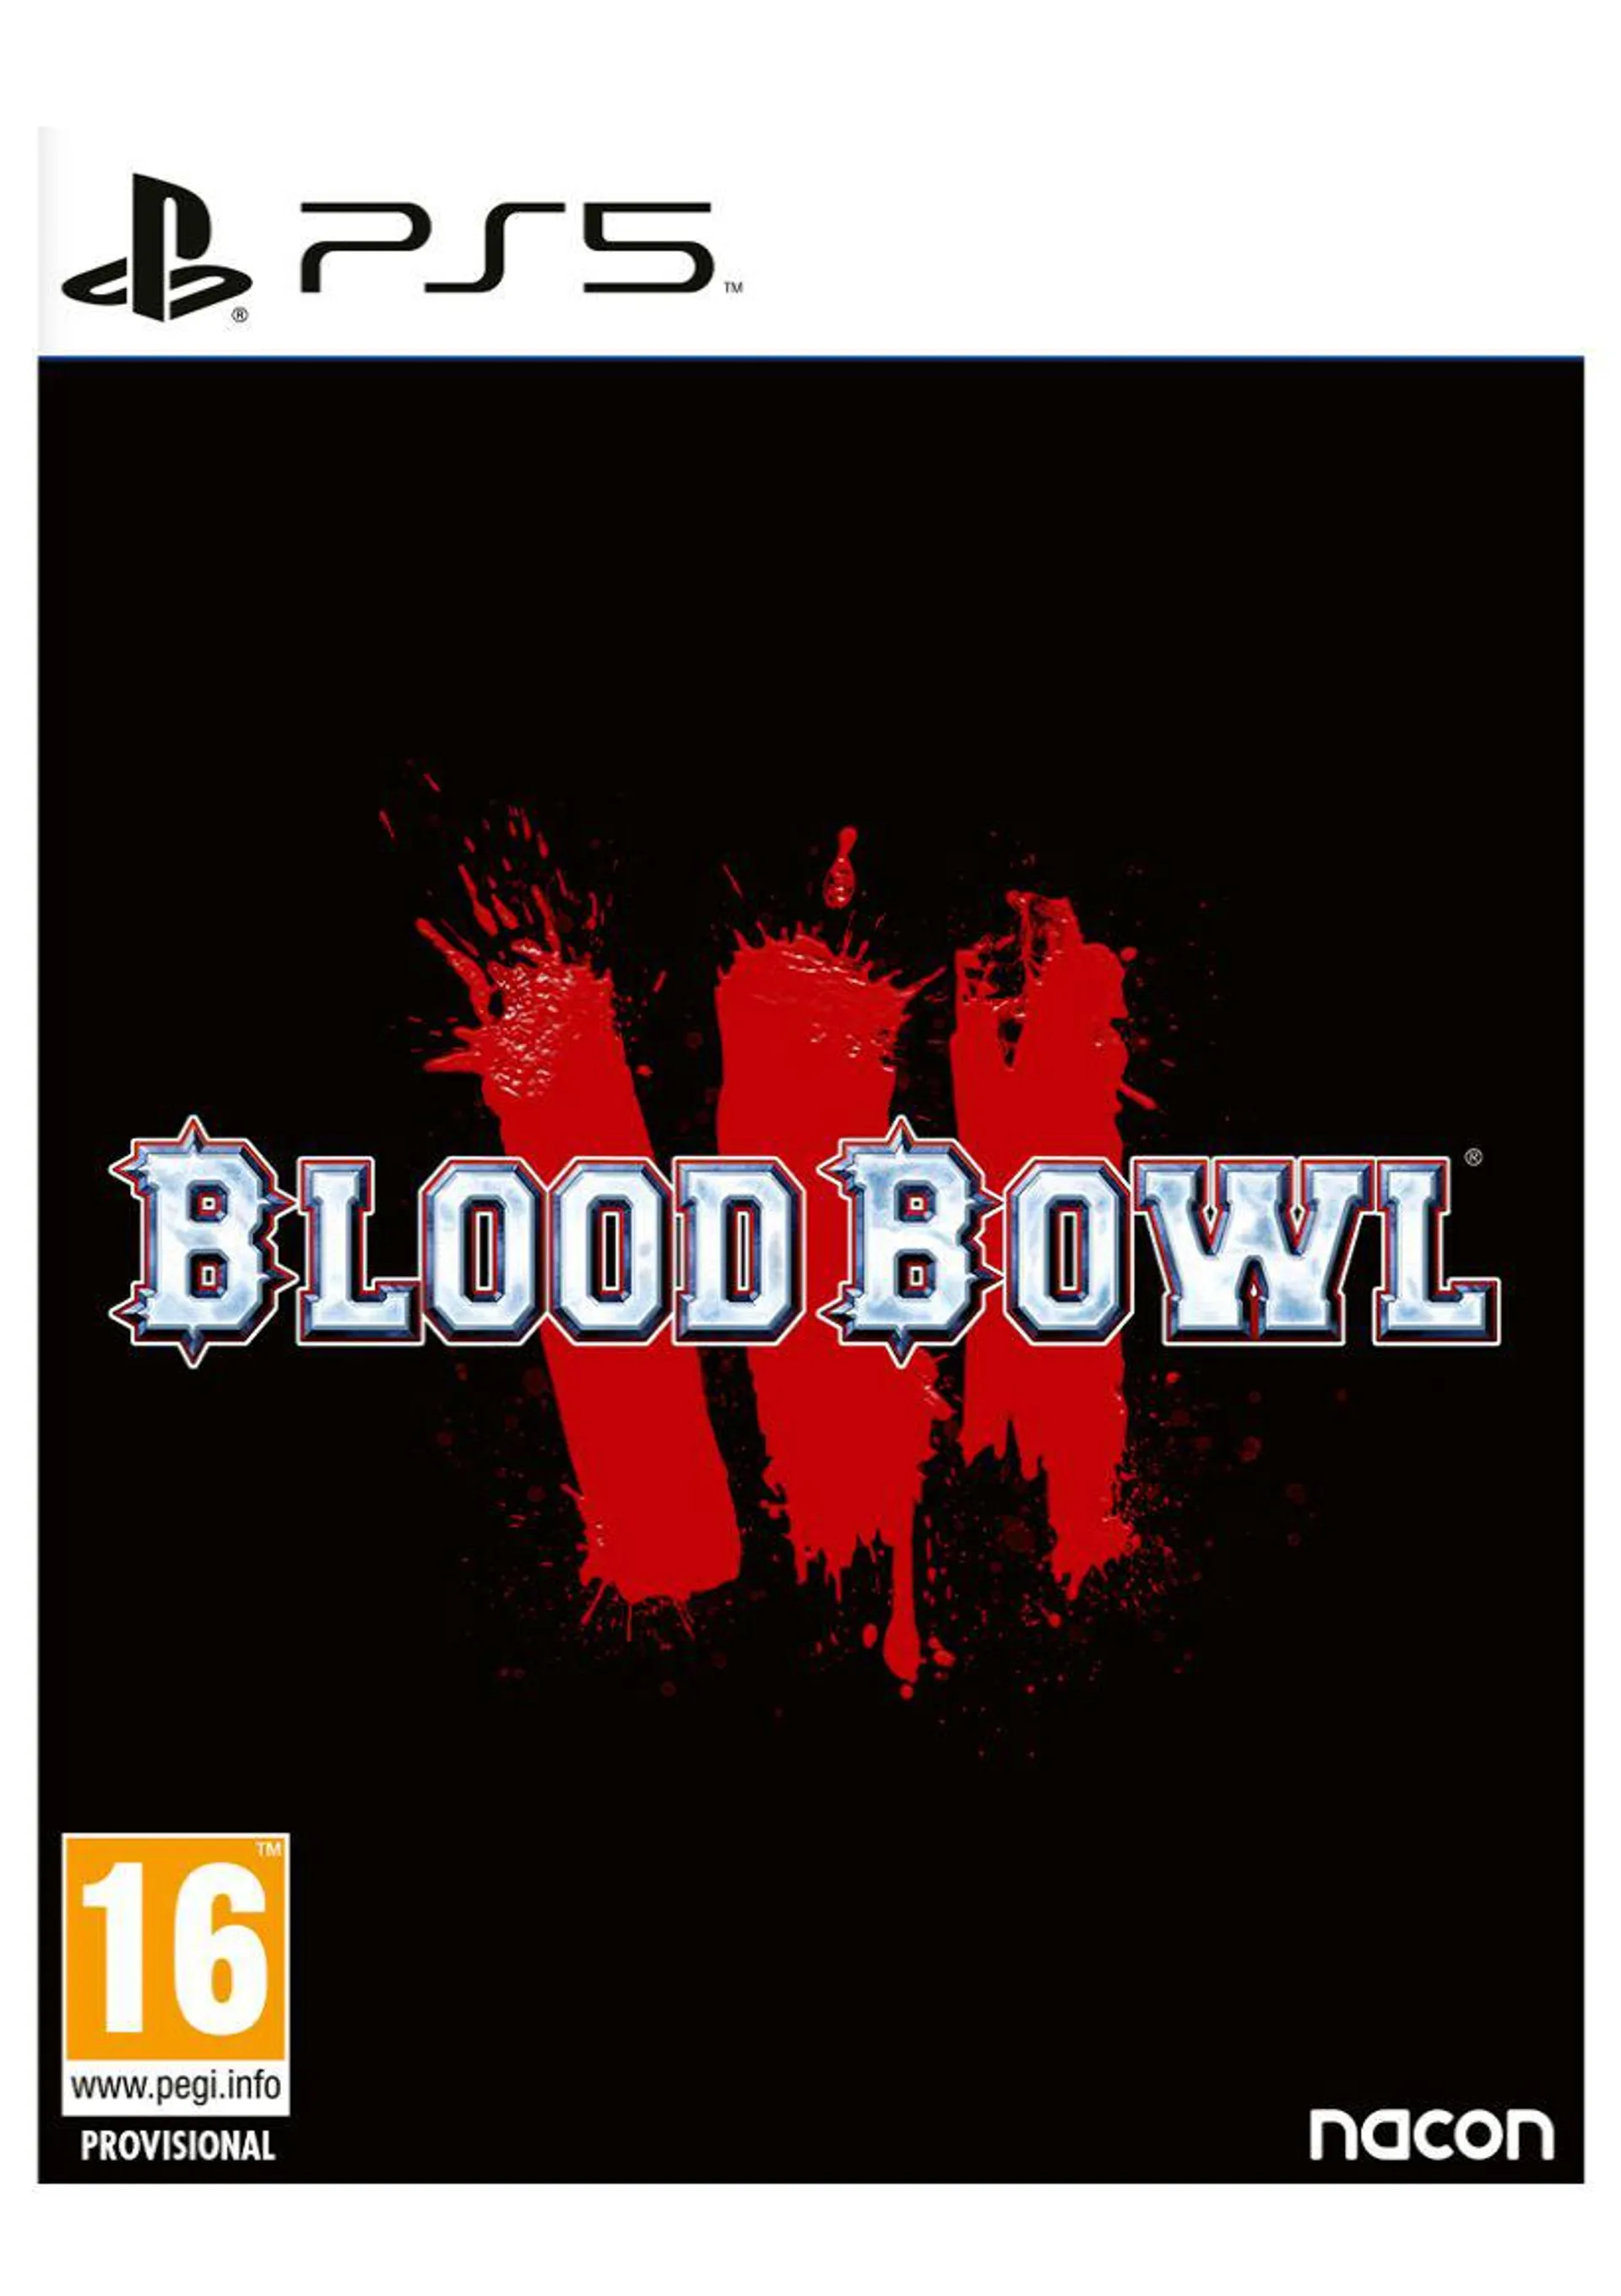 Blood Bowl 3 on PlayStation 5